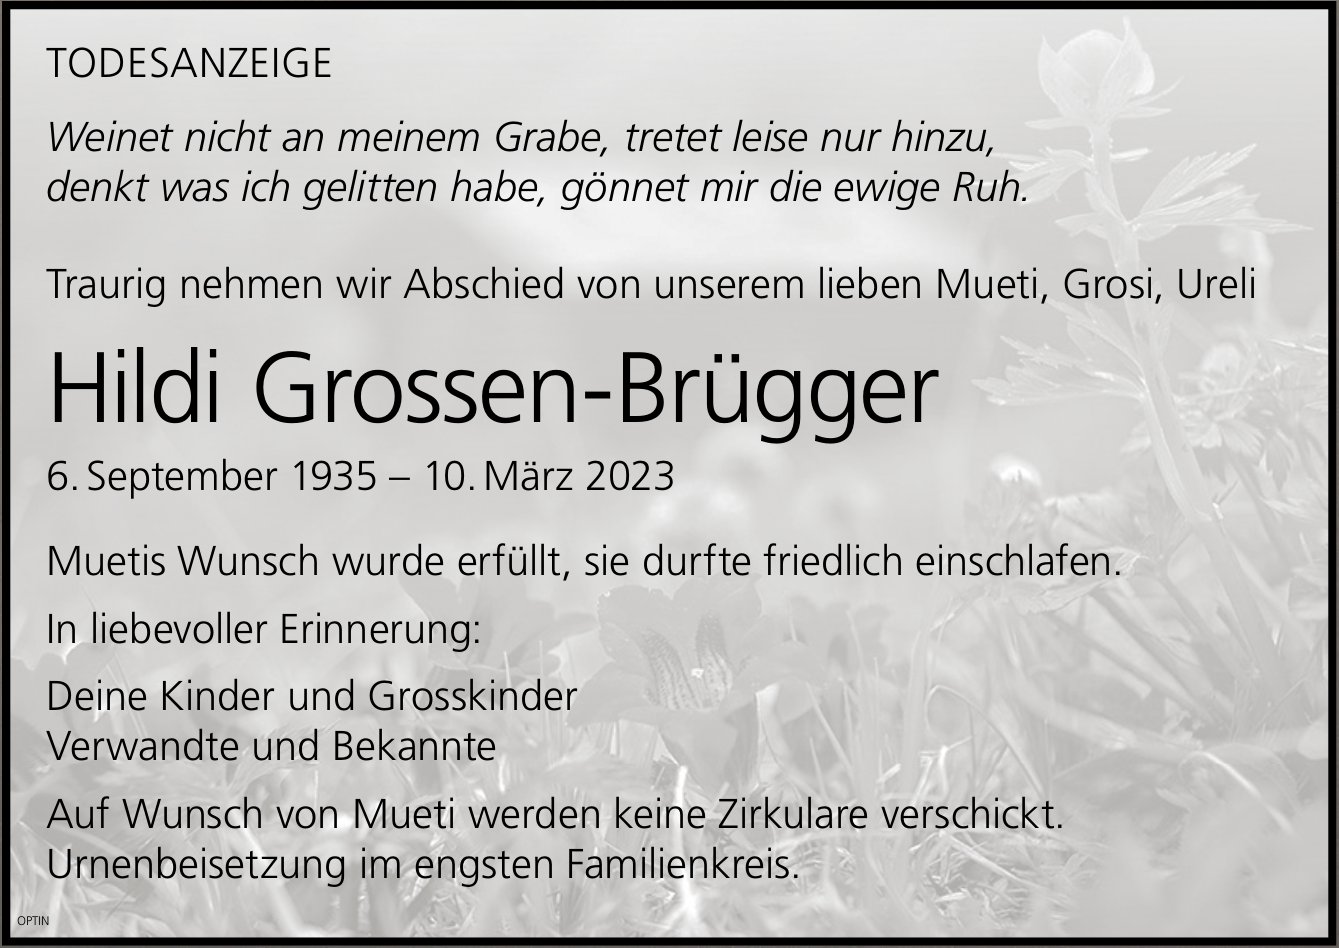 Hildi Grossen-Brügger, März 2023 / TA